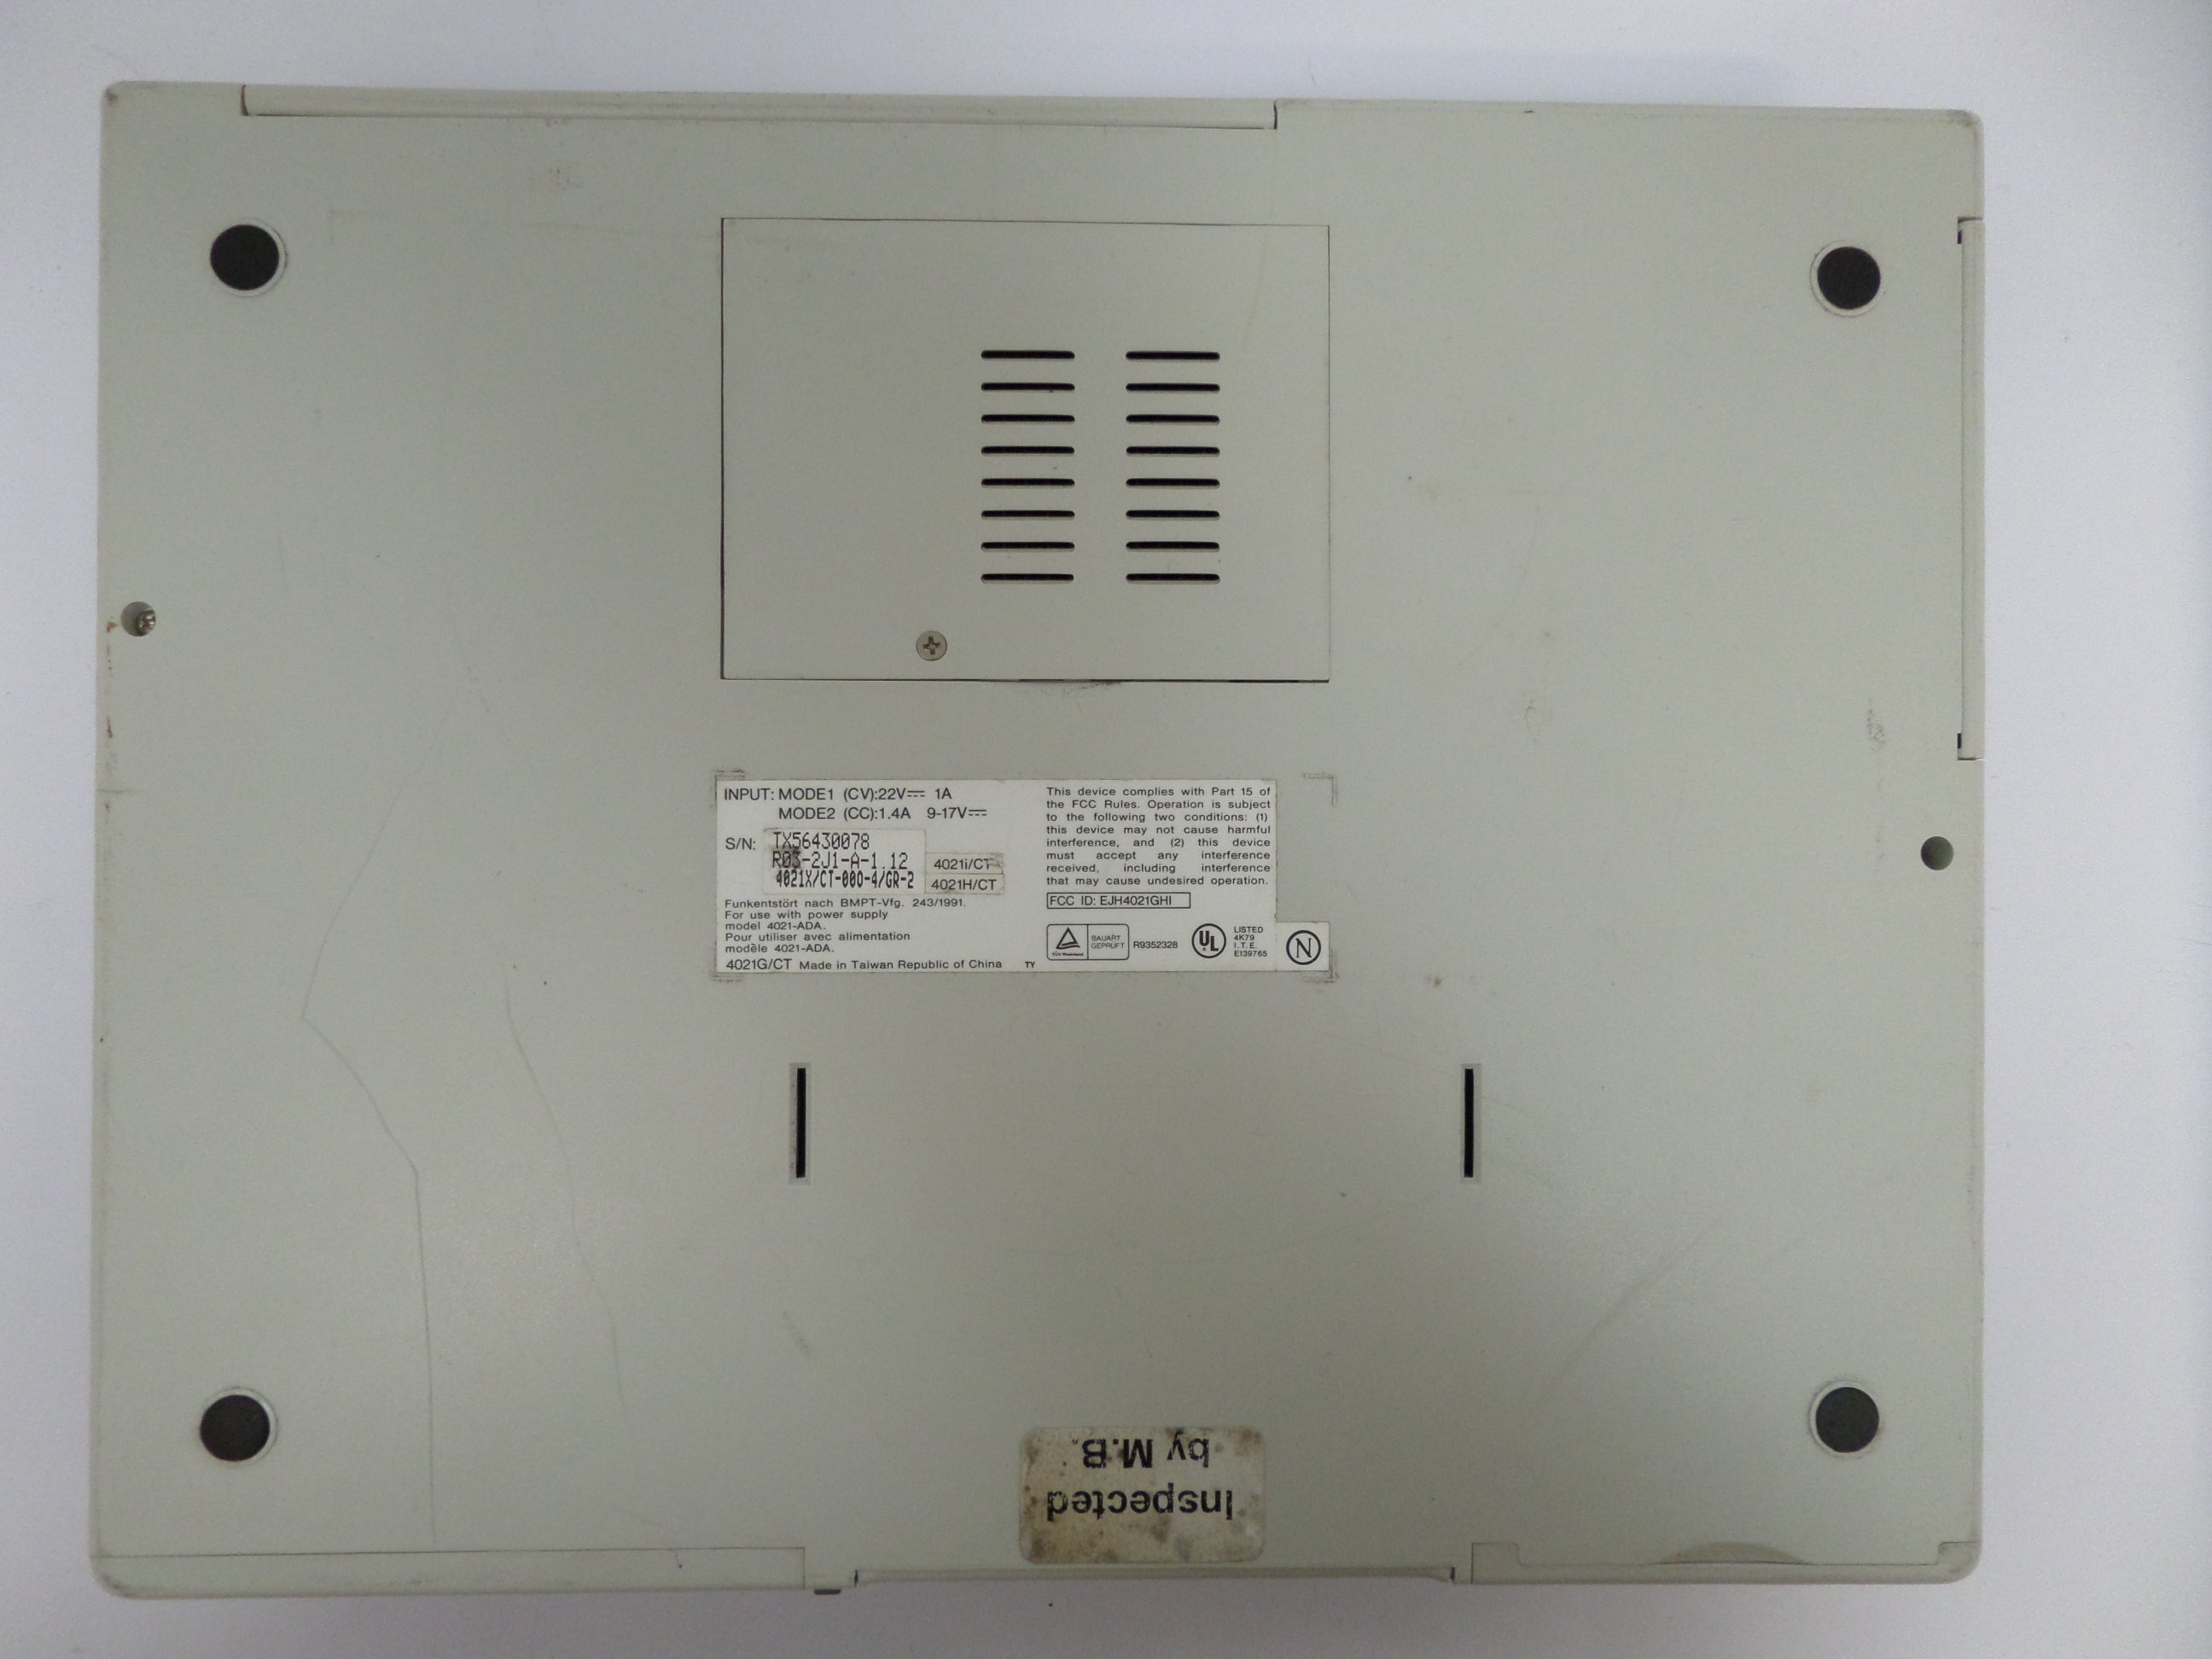 PR02089_LCN486T_Akhter LCN-486T Colour Laptop - Image5